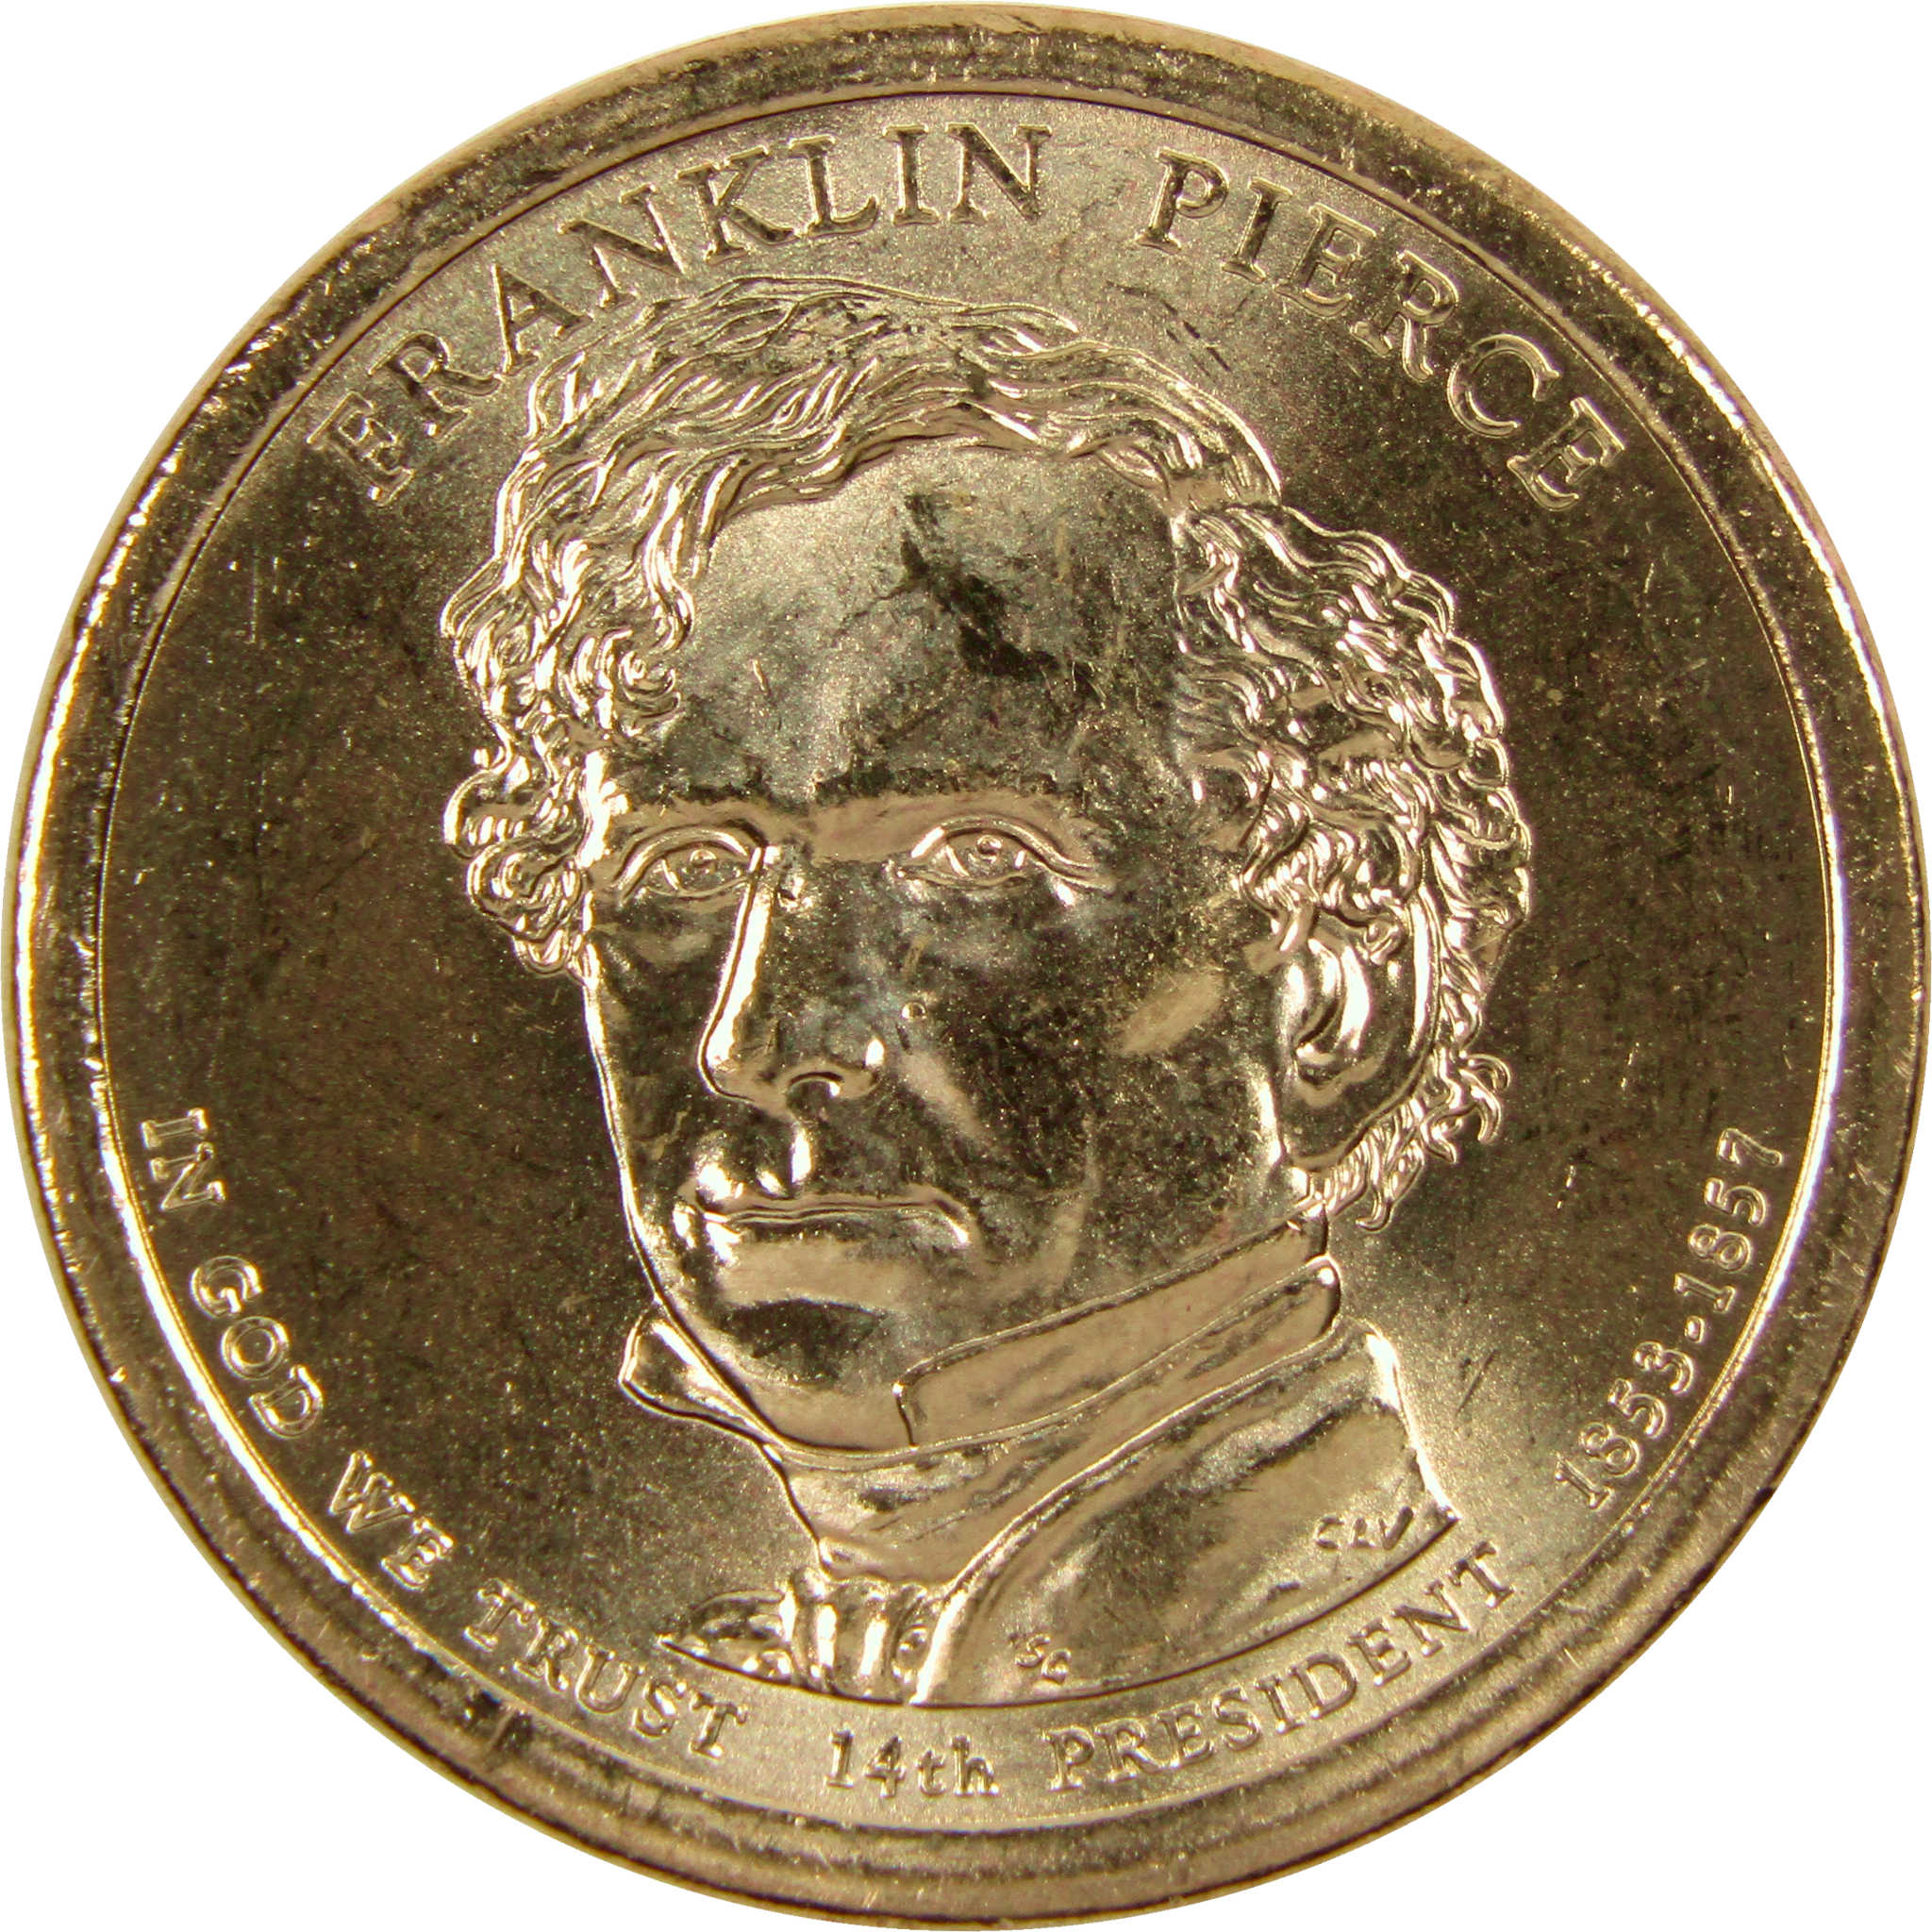 2010 P Franklin Pierce Presidential Dollar BU Uncirculated $1 Coin